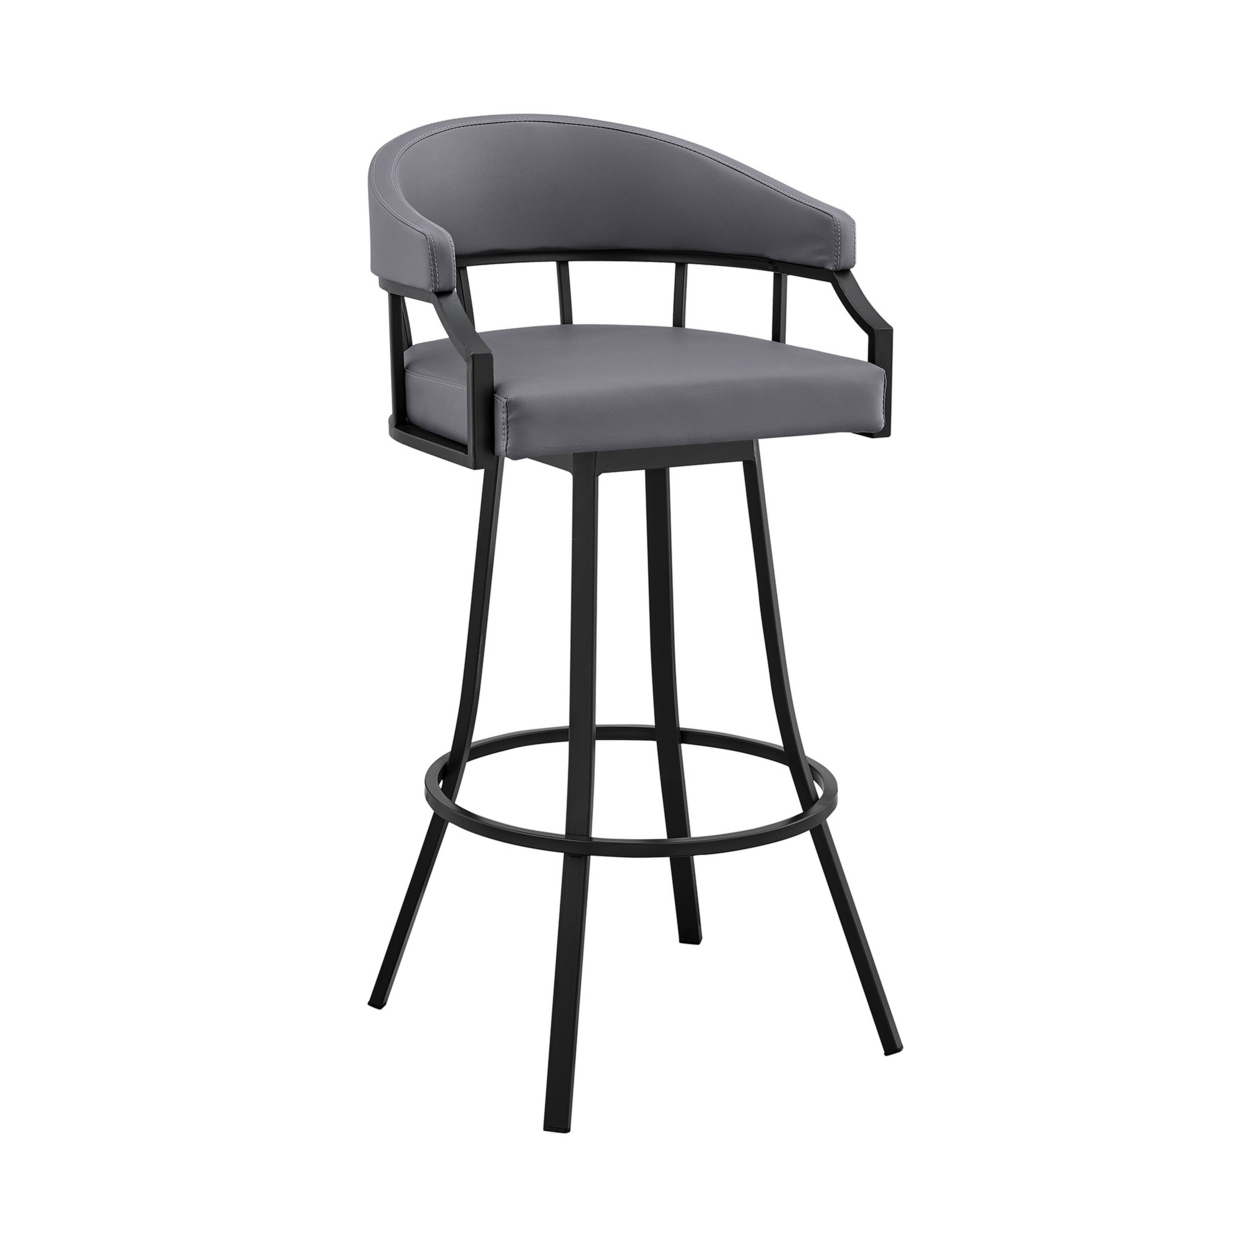 Cade 26 Inch Counter Stool, Swivel Chair, Faux Leather Cushion, Gray, Black- Saltoro Sherpi